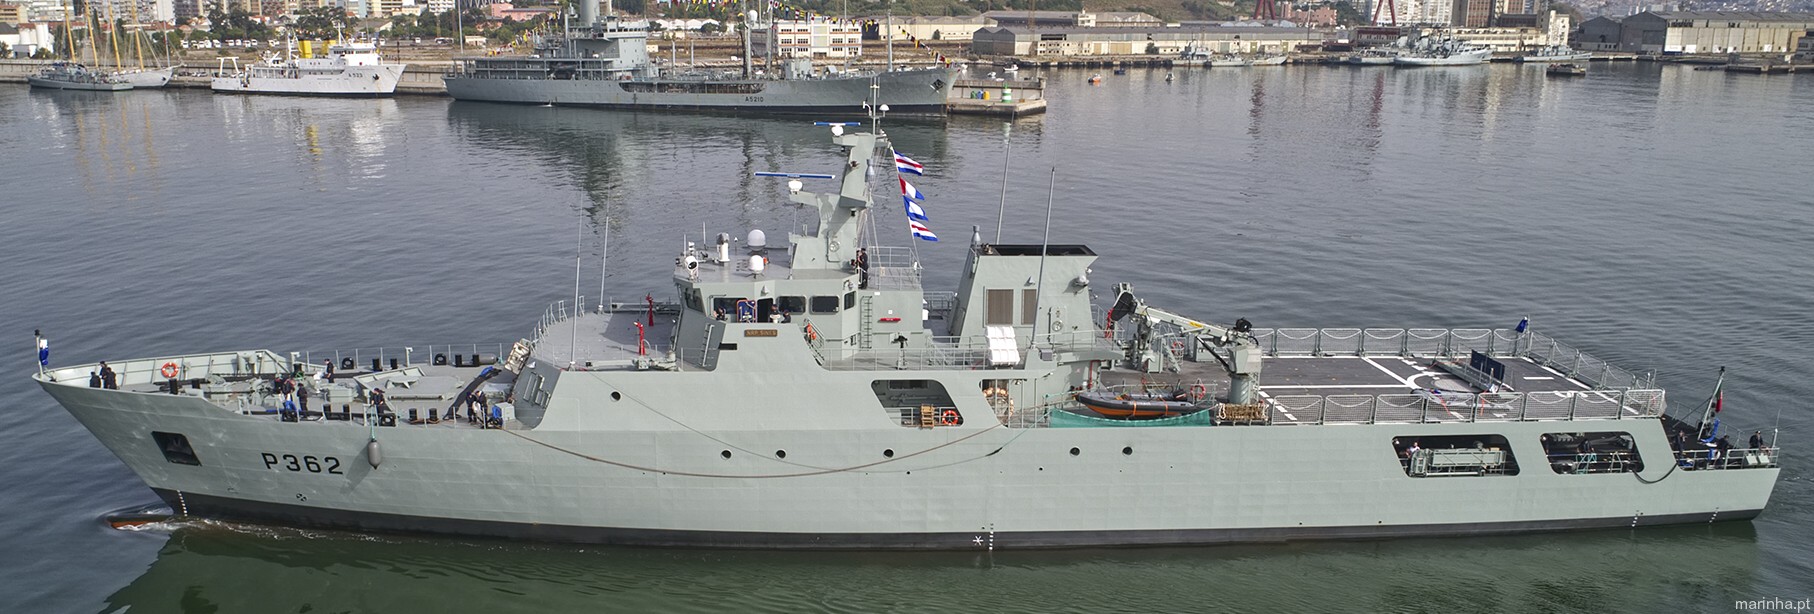 p-362 nrp sines viana do castelo class offshore patrol vessel opv portuguese navy marinha 04